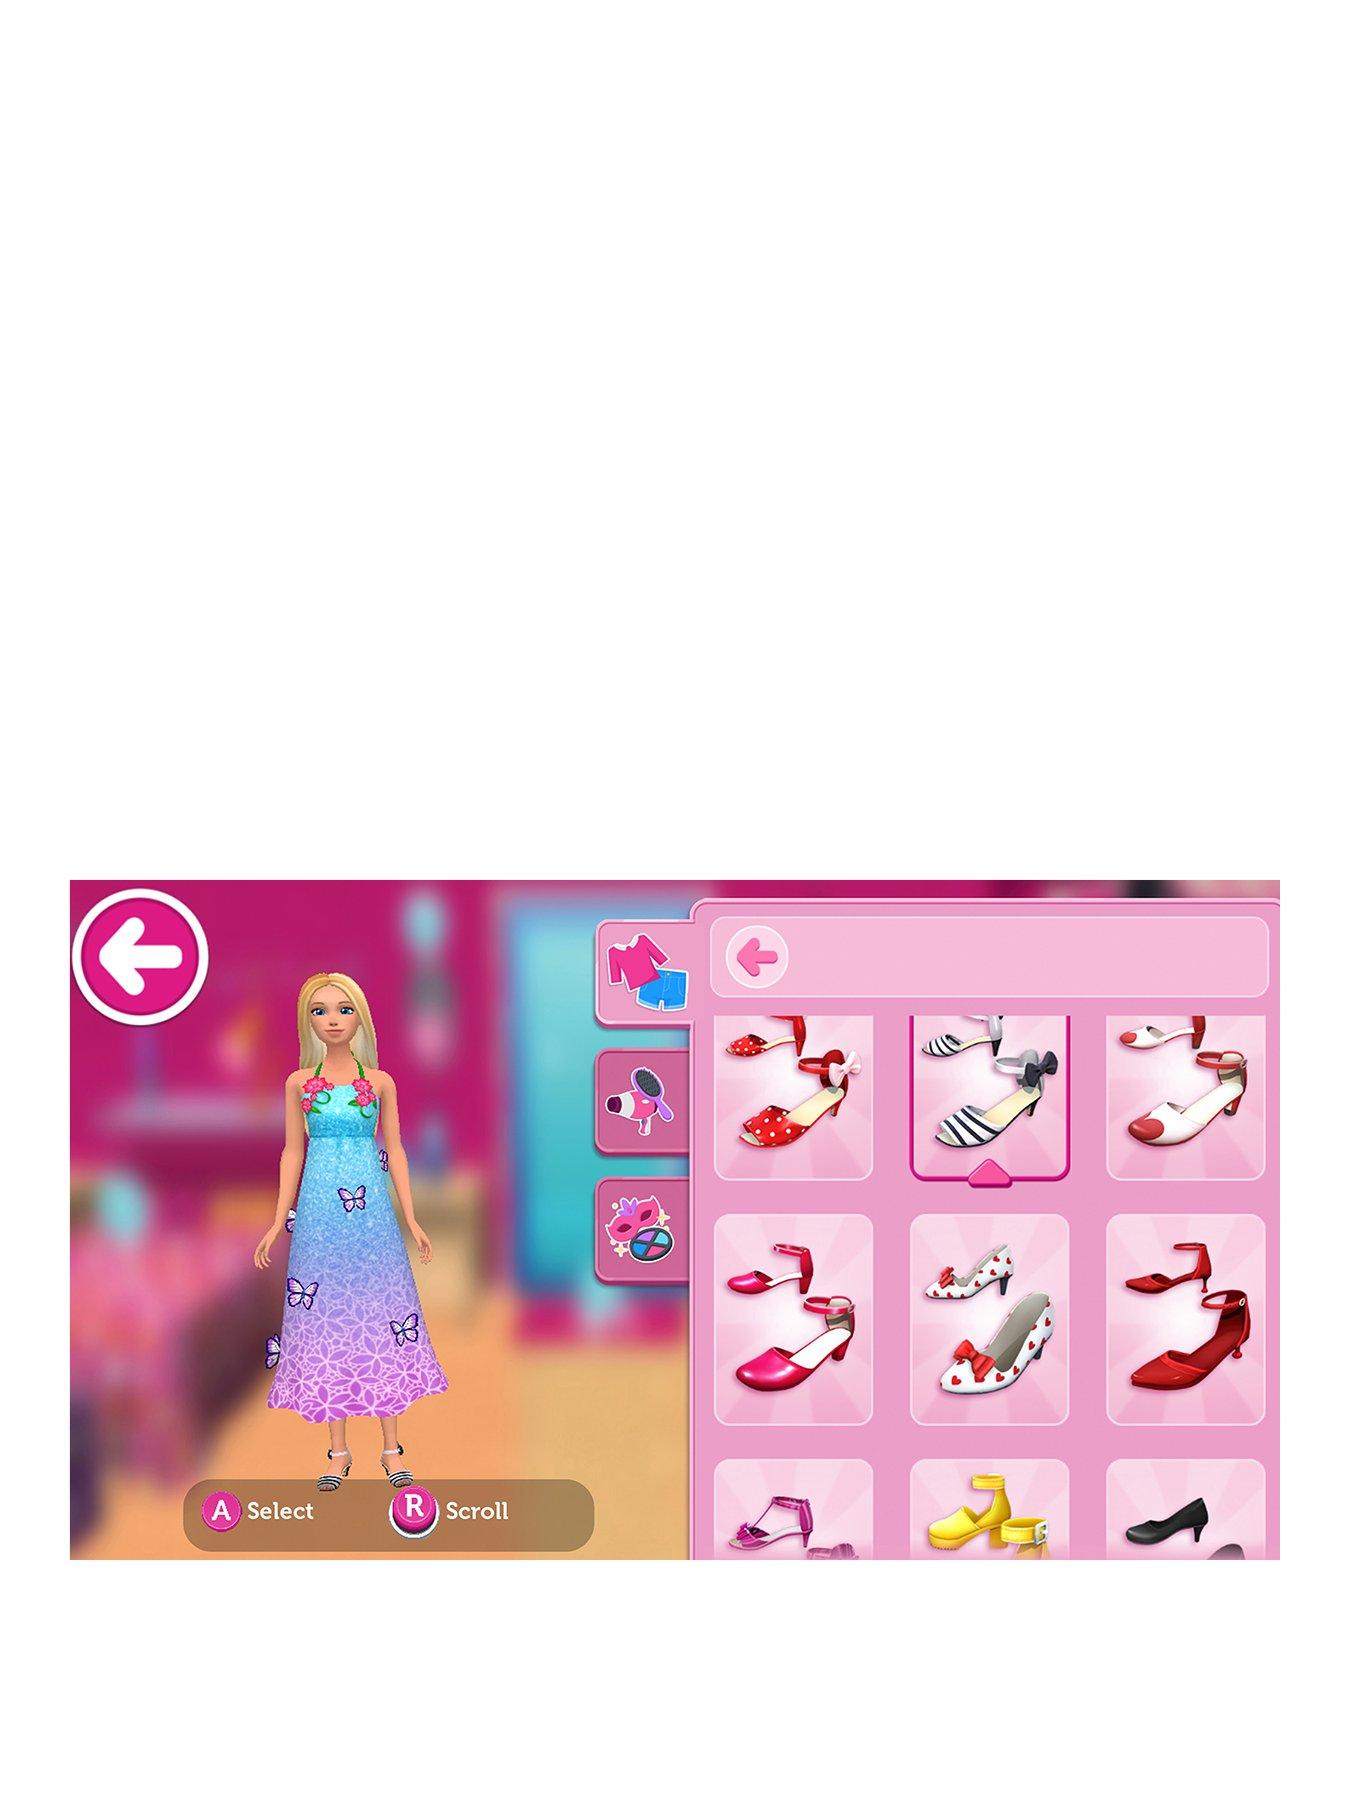 Barbie Dreamhouse Adventures SWITCH